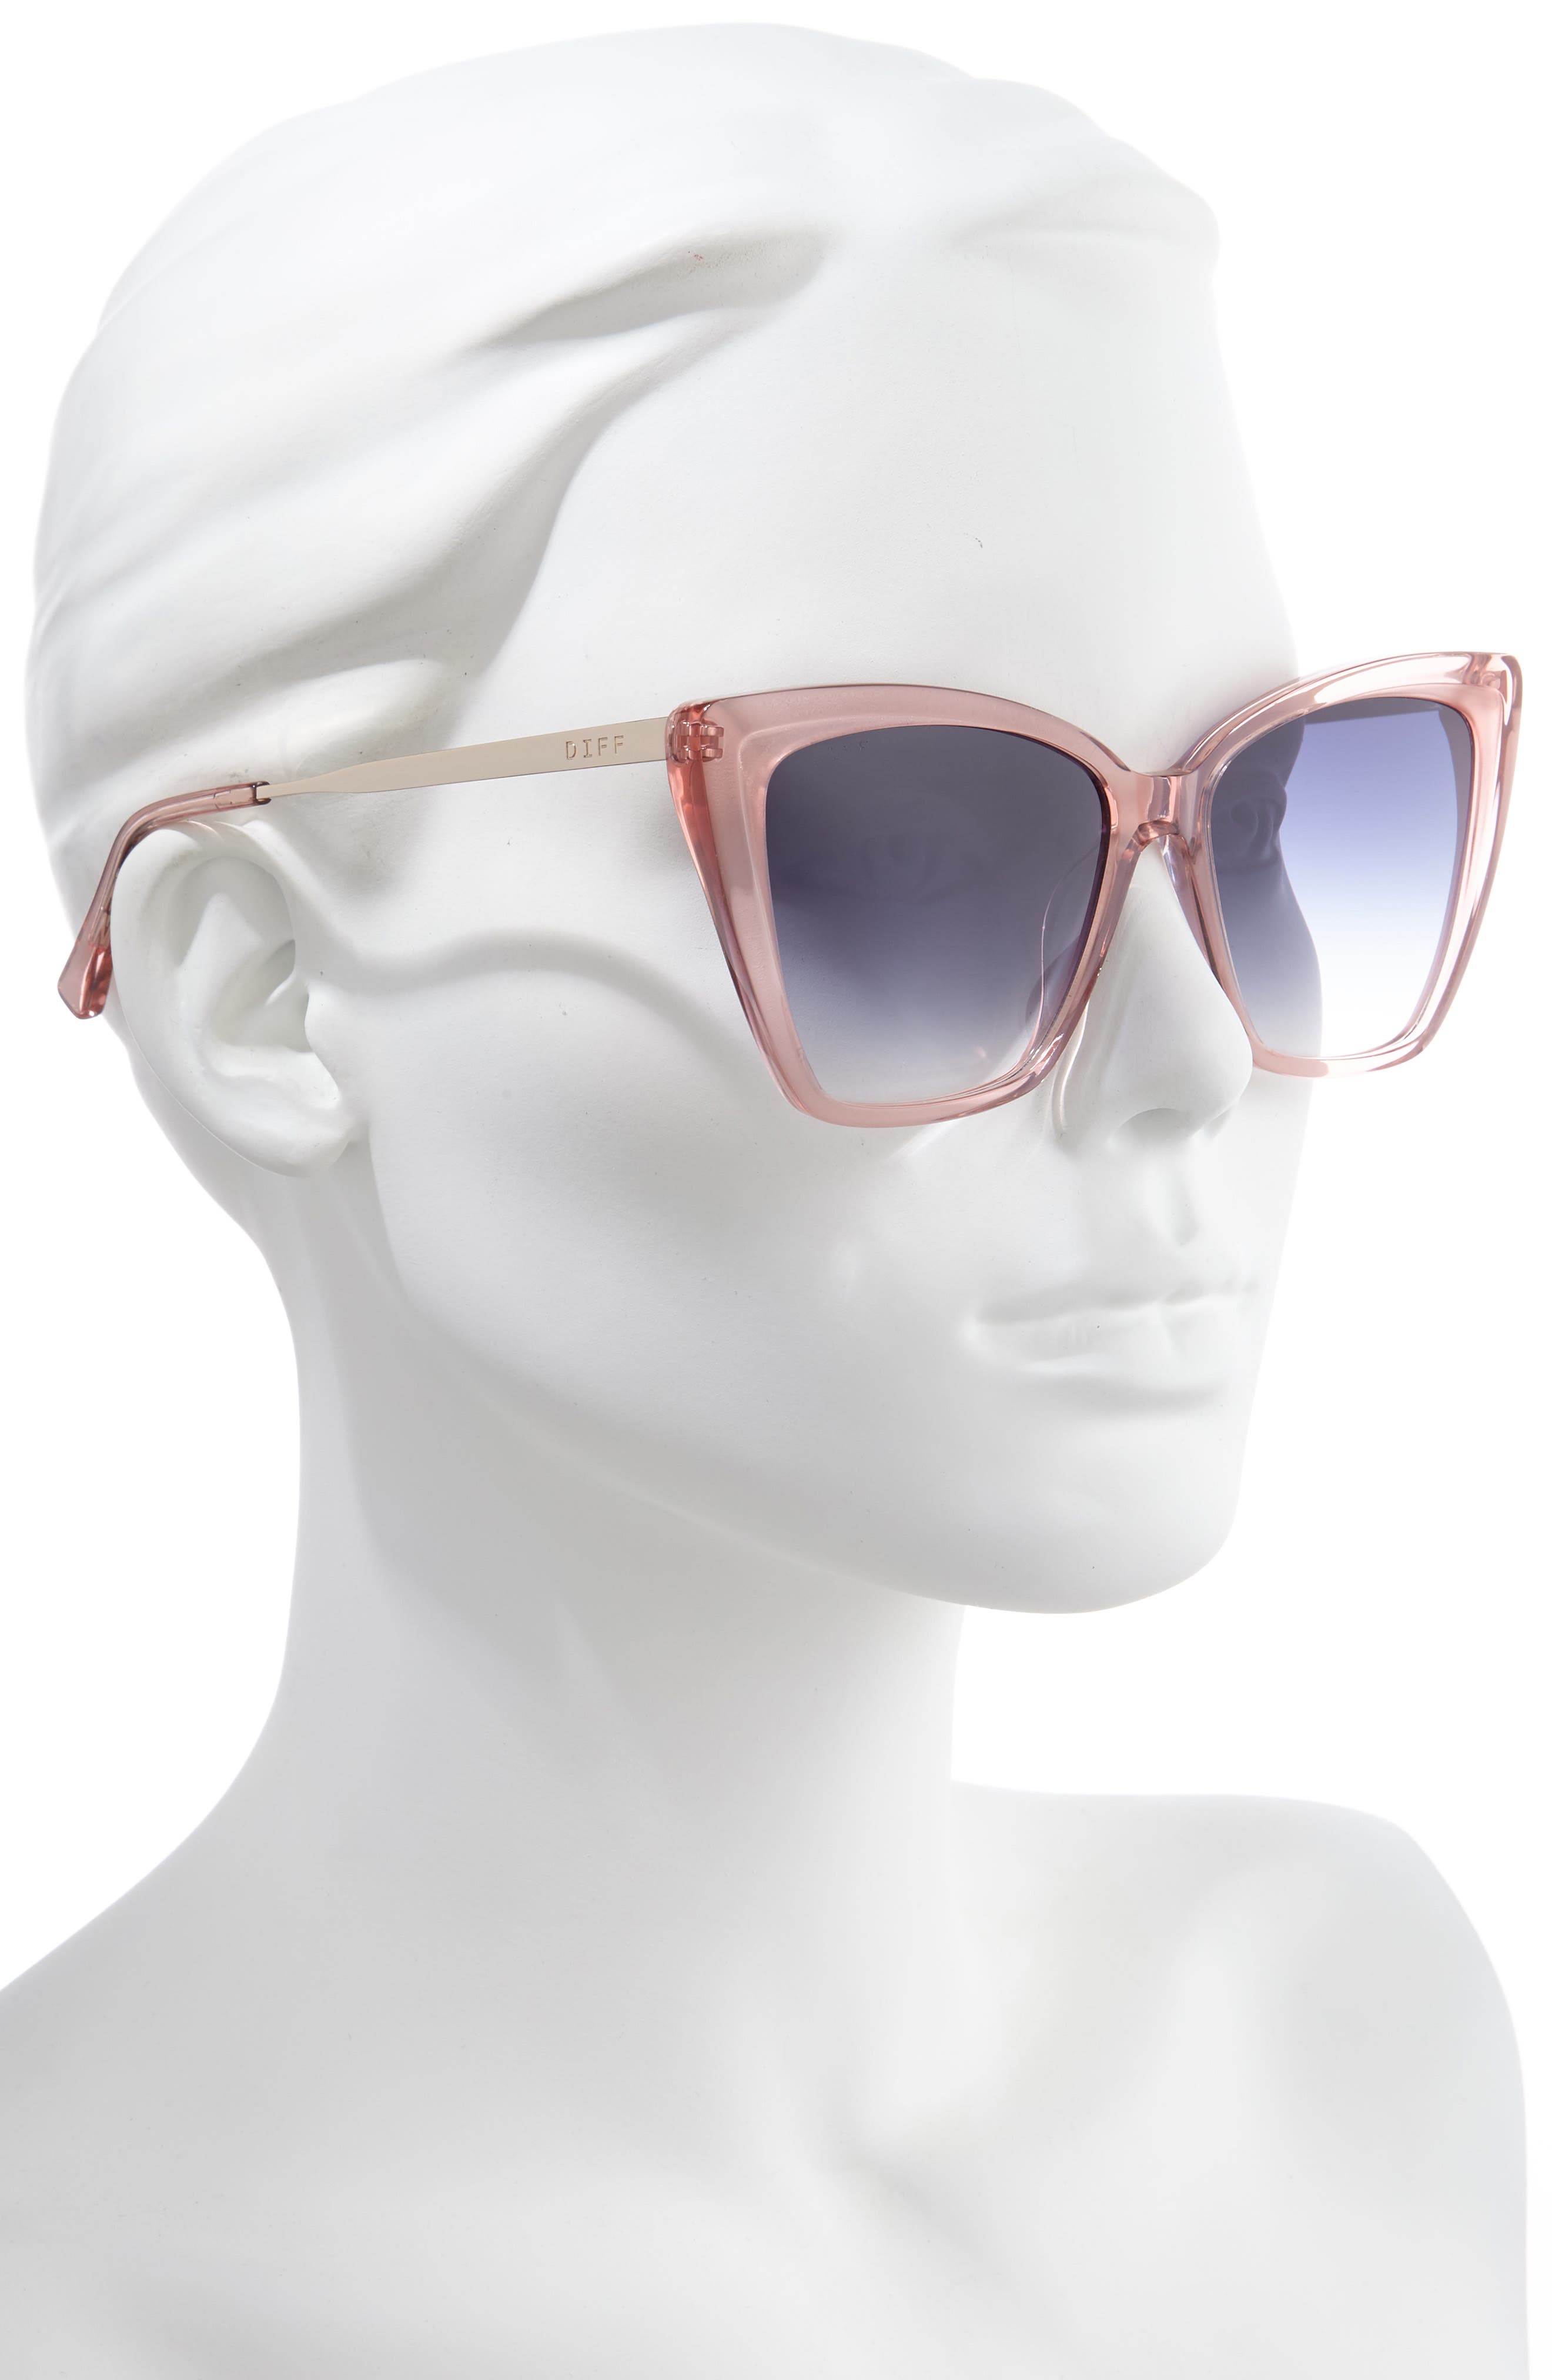 13 Best Sunglasses for Women 2022 - Cute Sunglasses for Summer